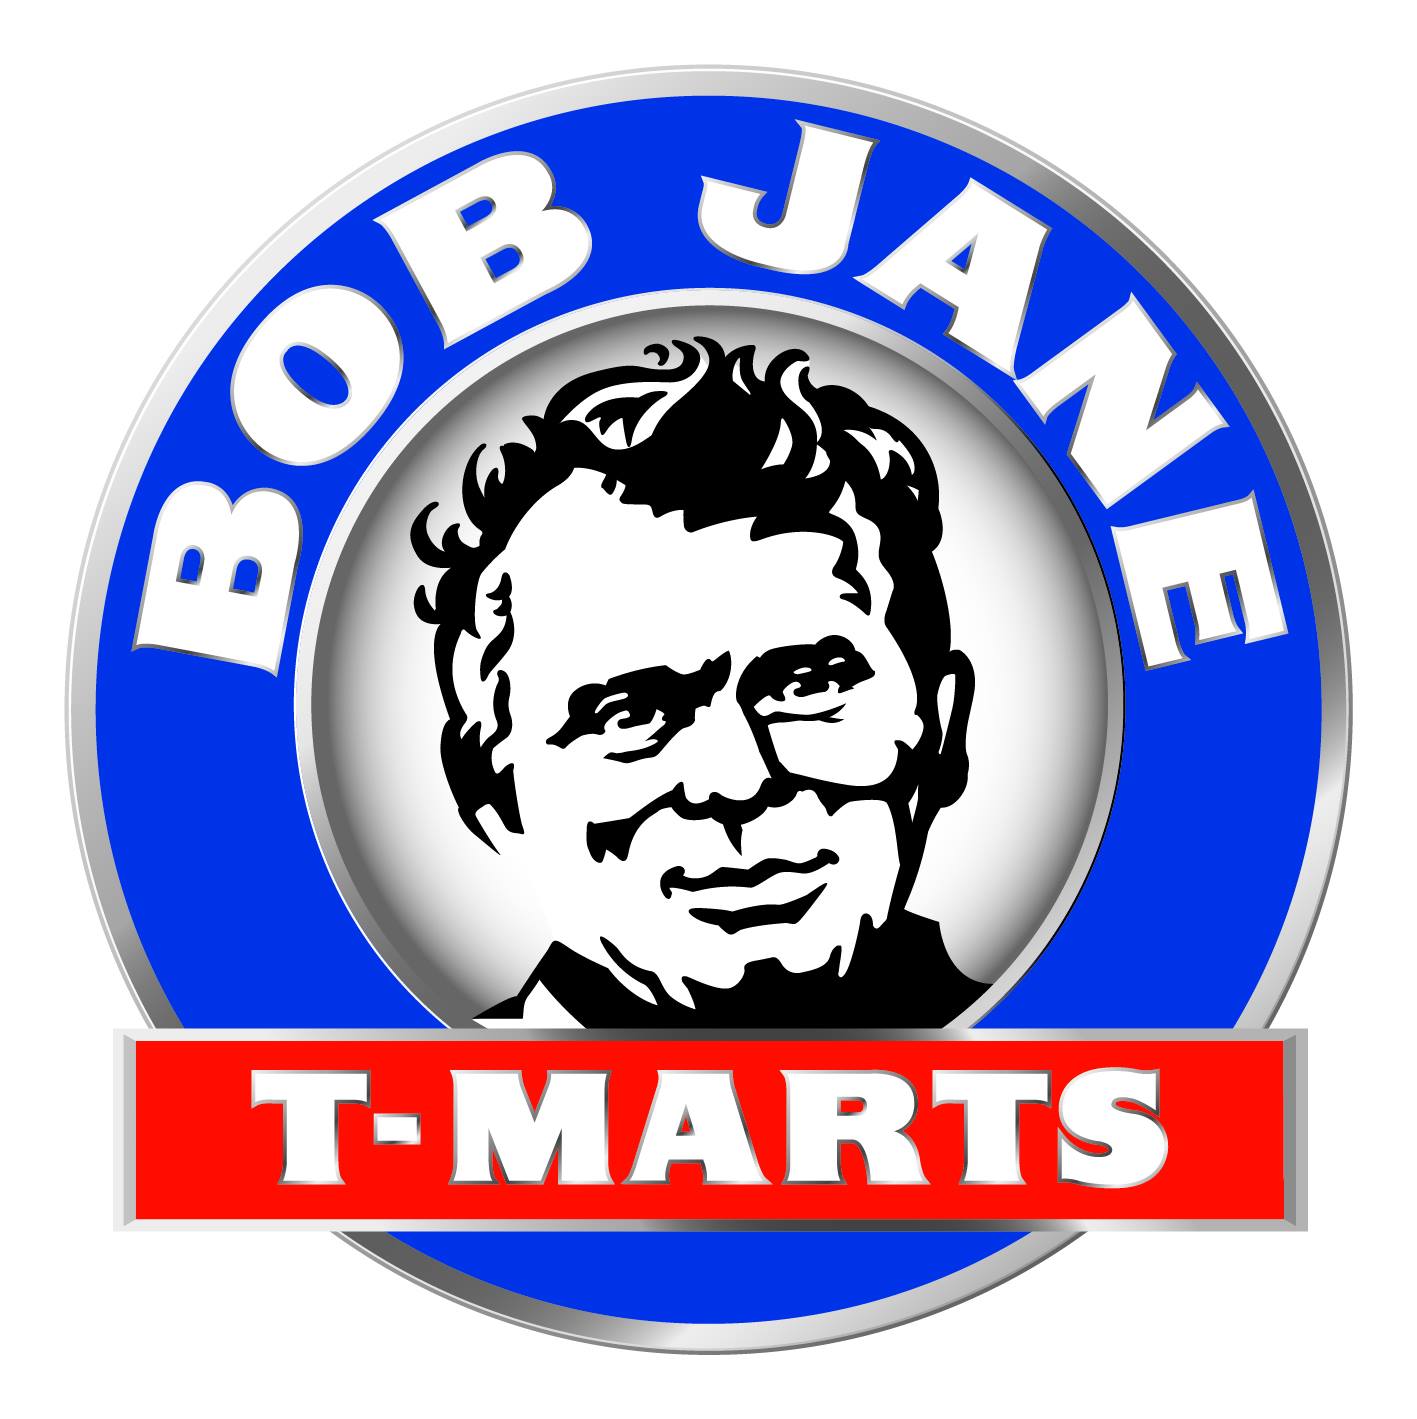 Bob Jane T-Marts